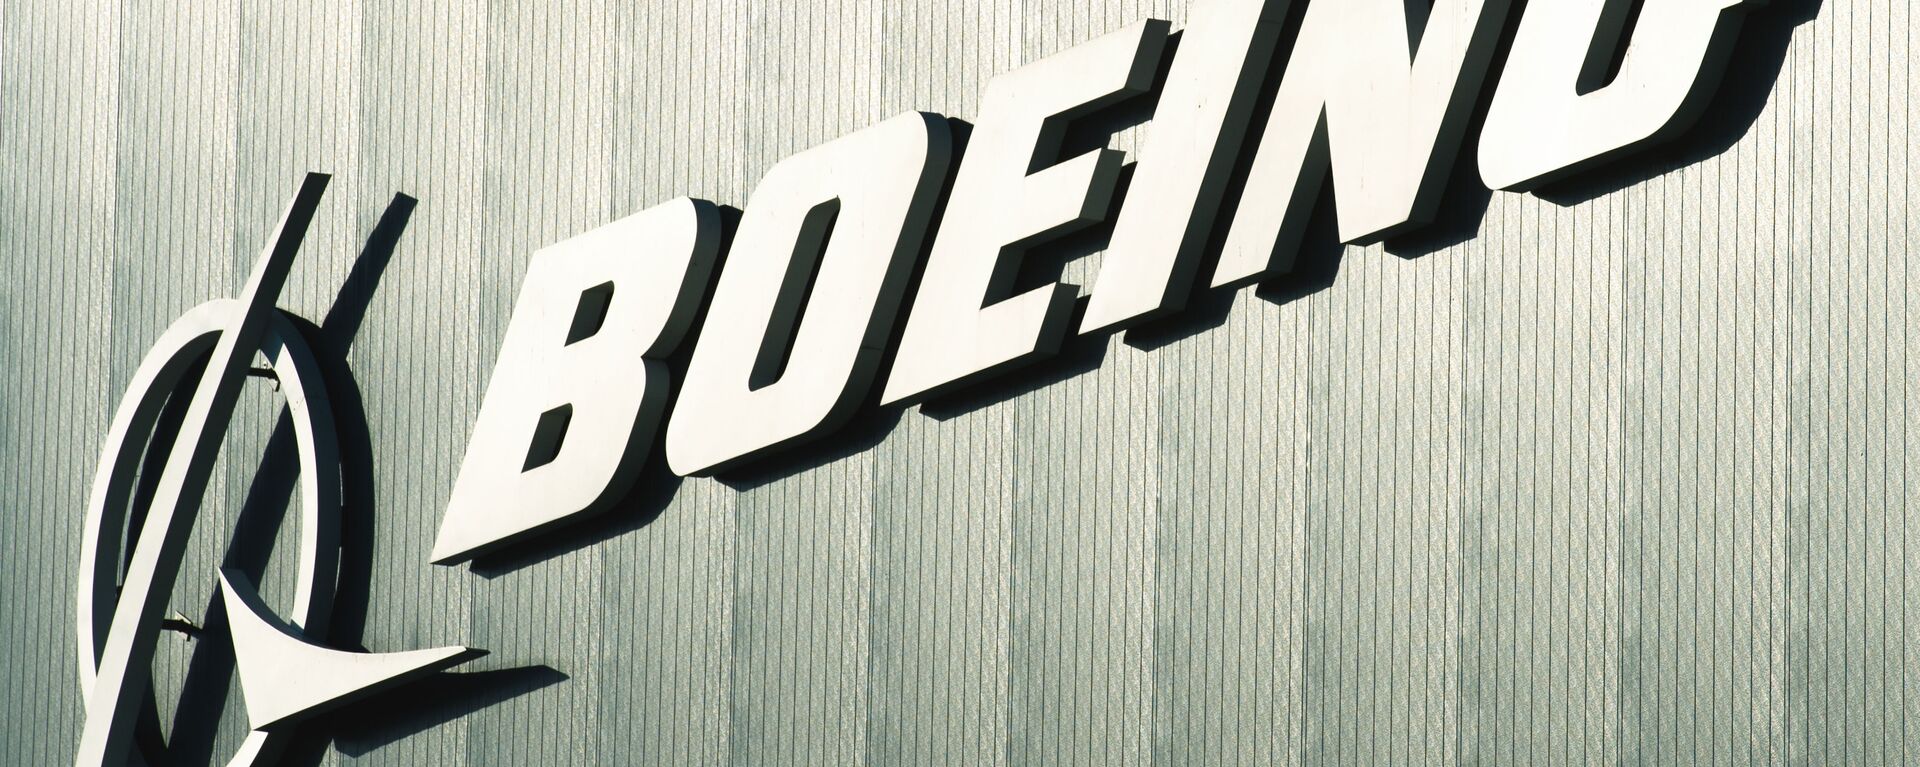 Логотип компании Boeing - 俄羅斯衛星通訊社, 1920, 08.01.2021